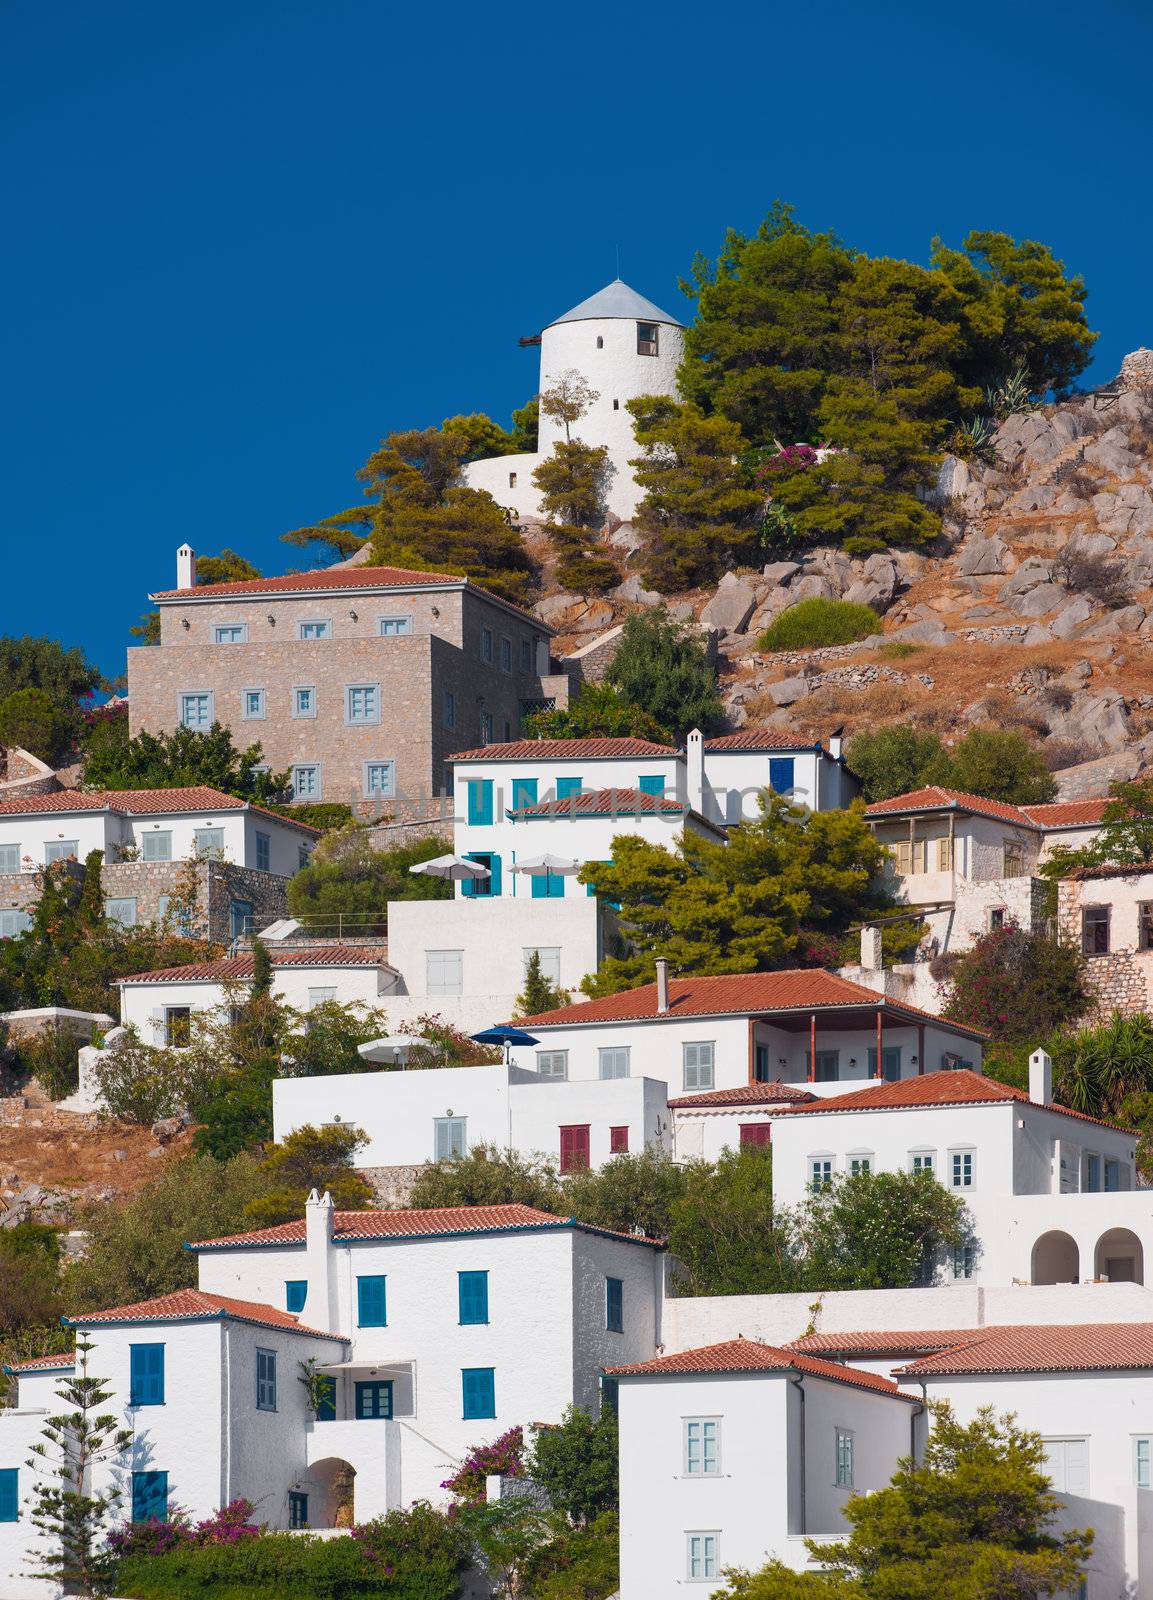 Village on the island of Hydra, Greece by akarelias